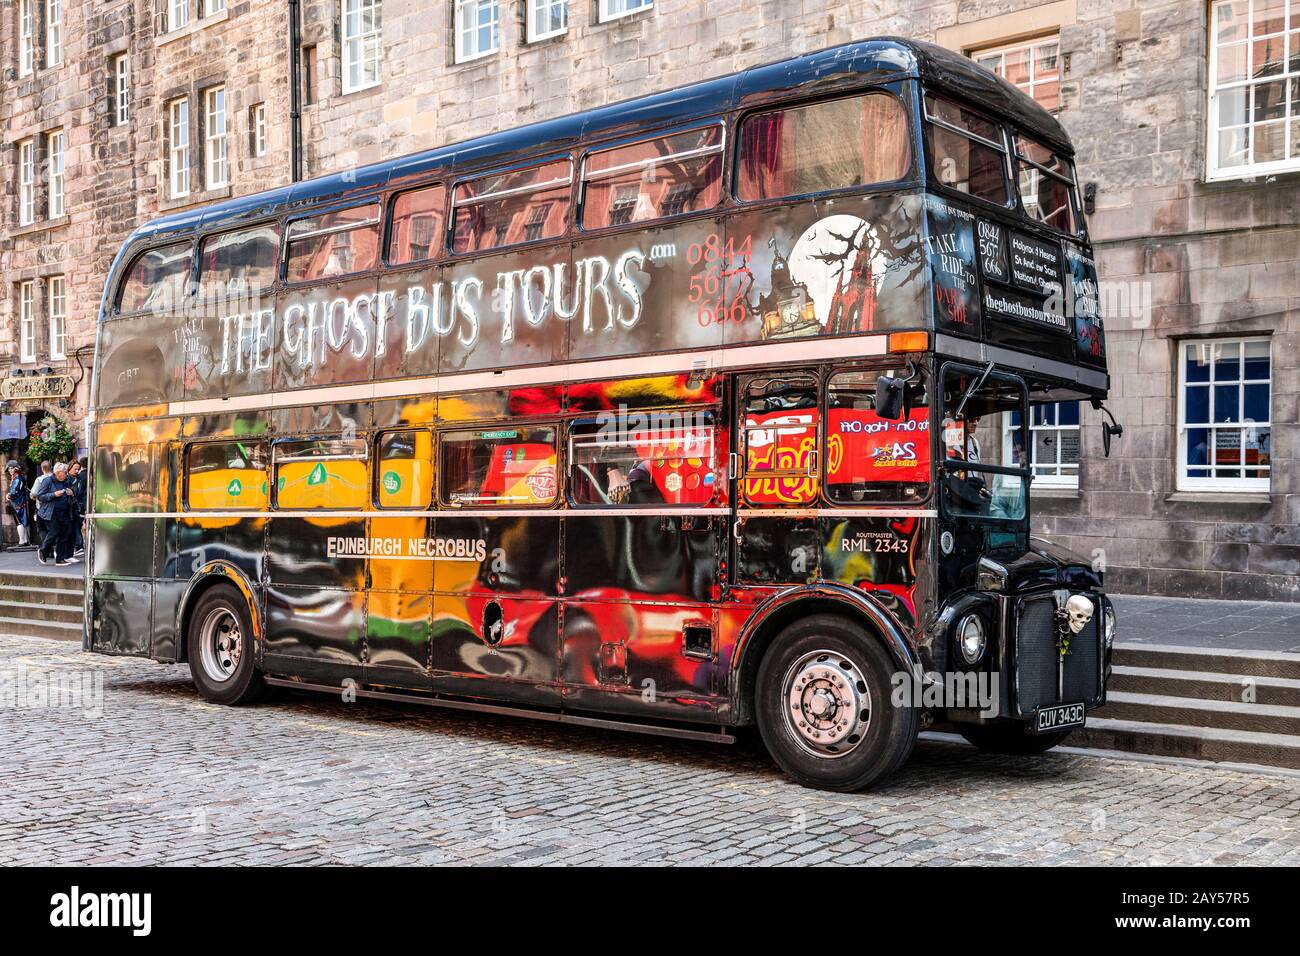 United Kingdom - Scotland Edinburgh - The Ghost Bus Tours - Comedy Horros Show Stock Photo